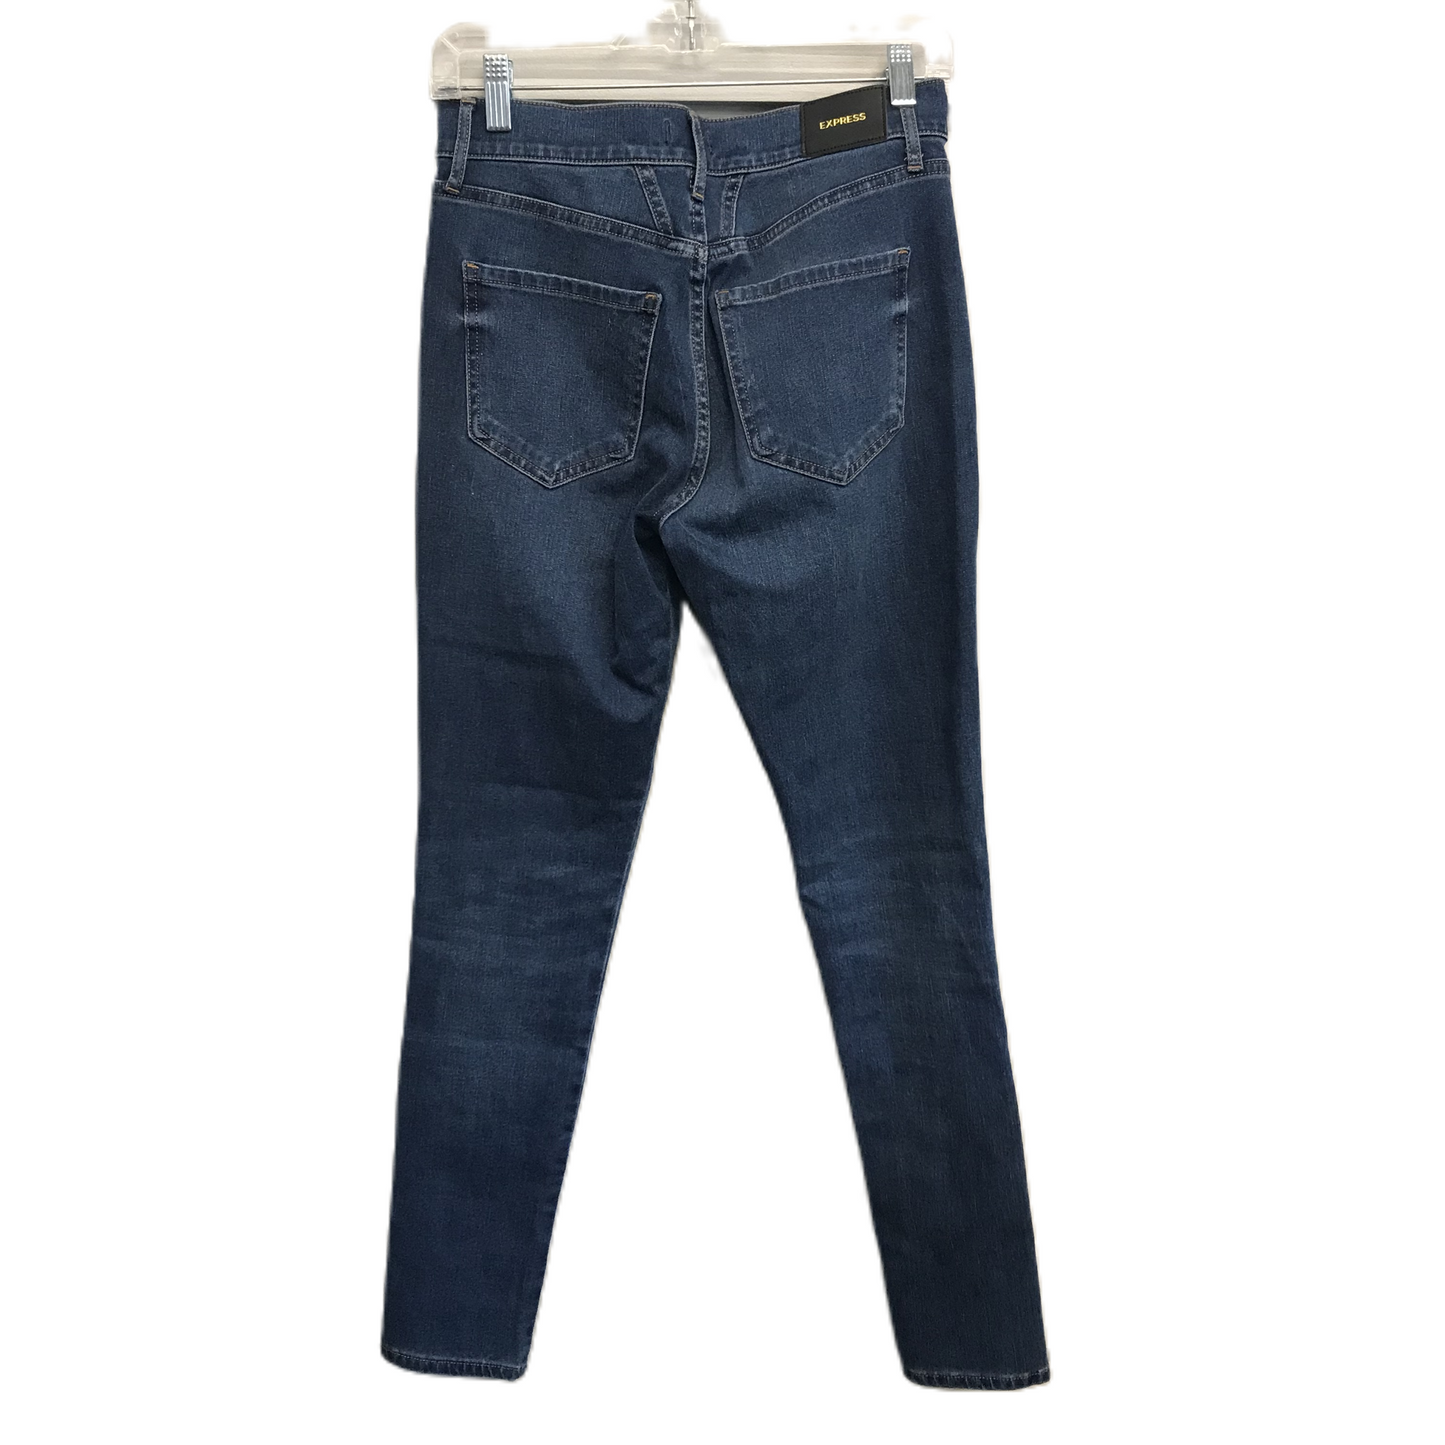 Blue Denim Jeans Skinny By Express, Size: 4